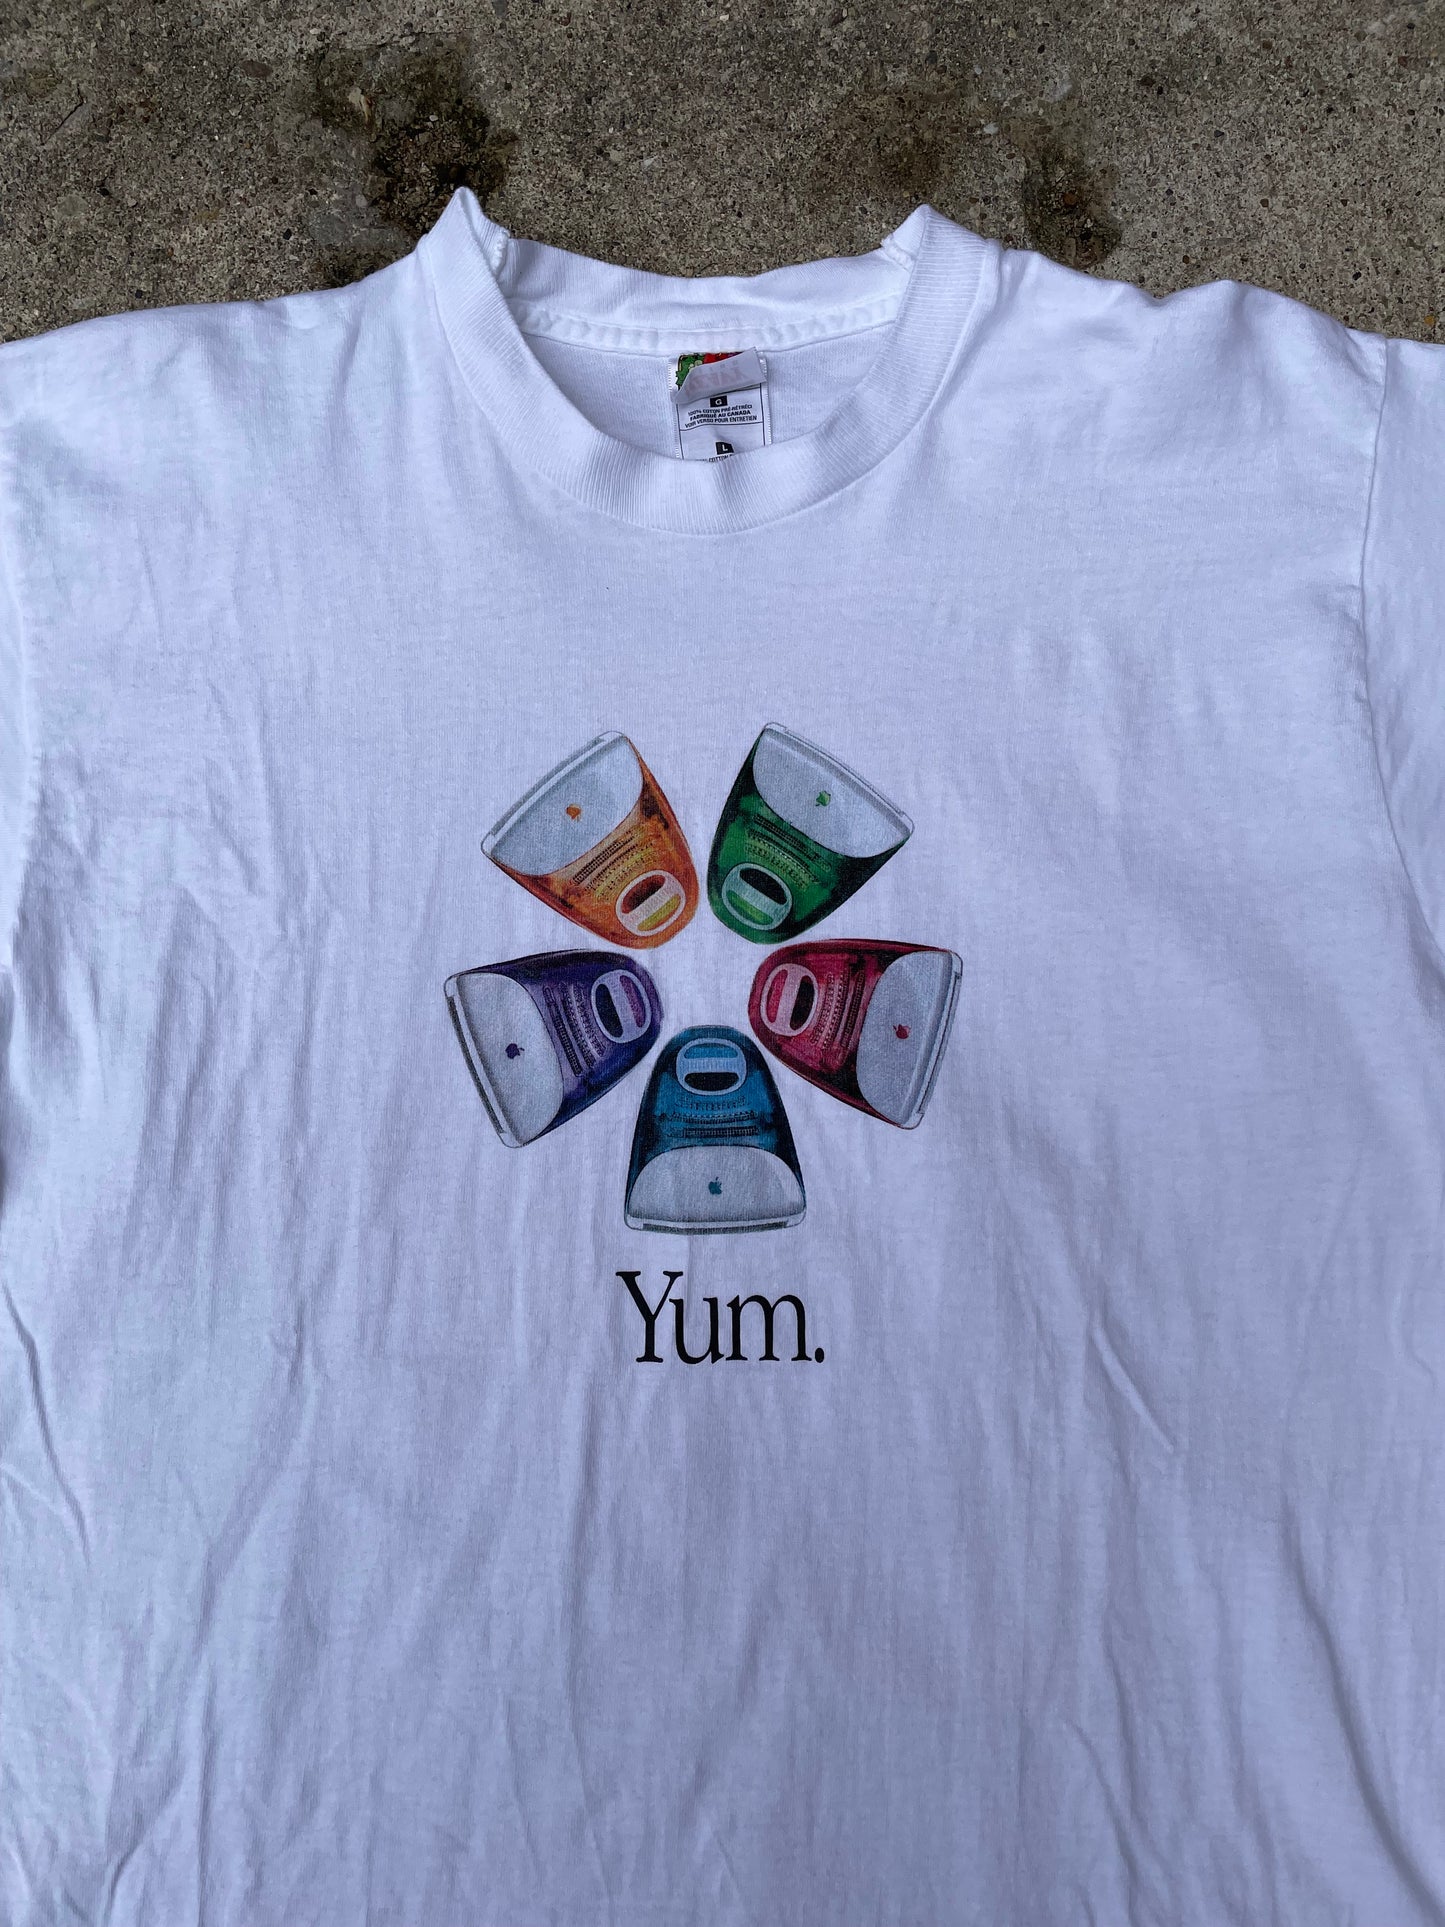 1990's Apple Macintosh G3 'Yum' T-Shirt - L